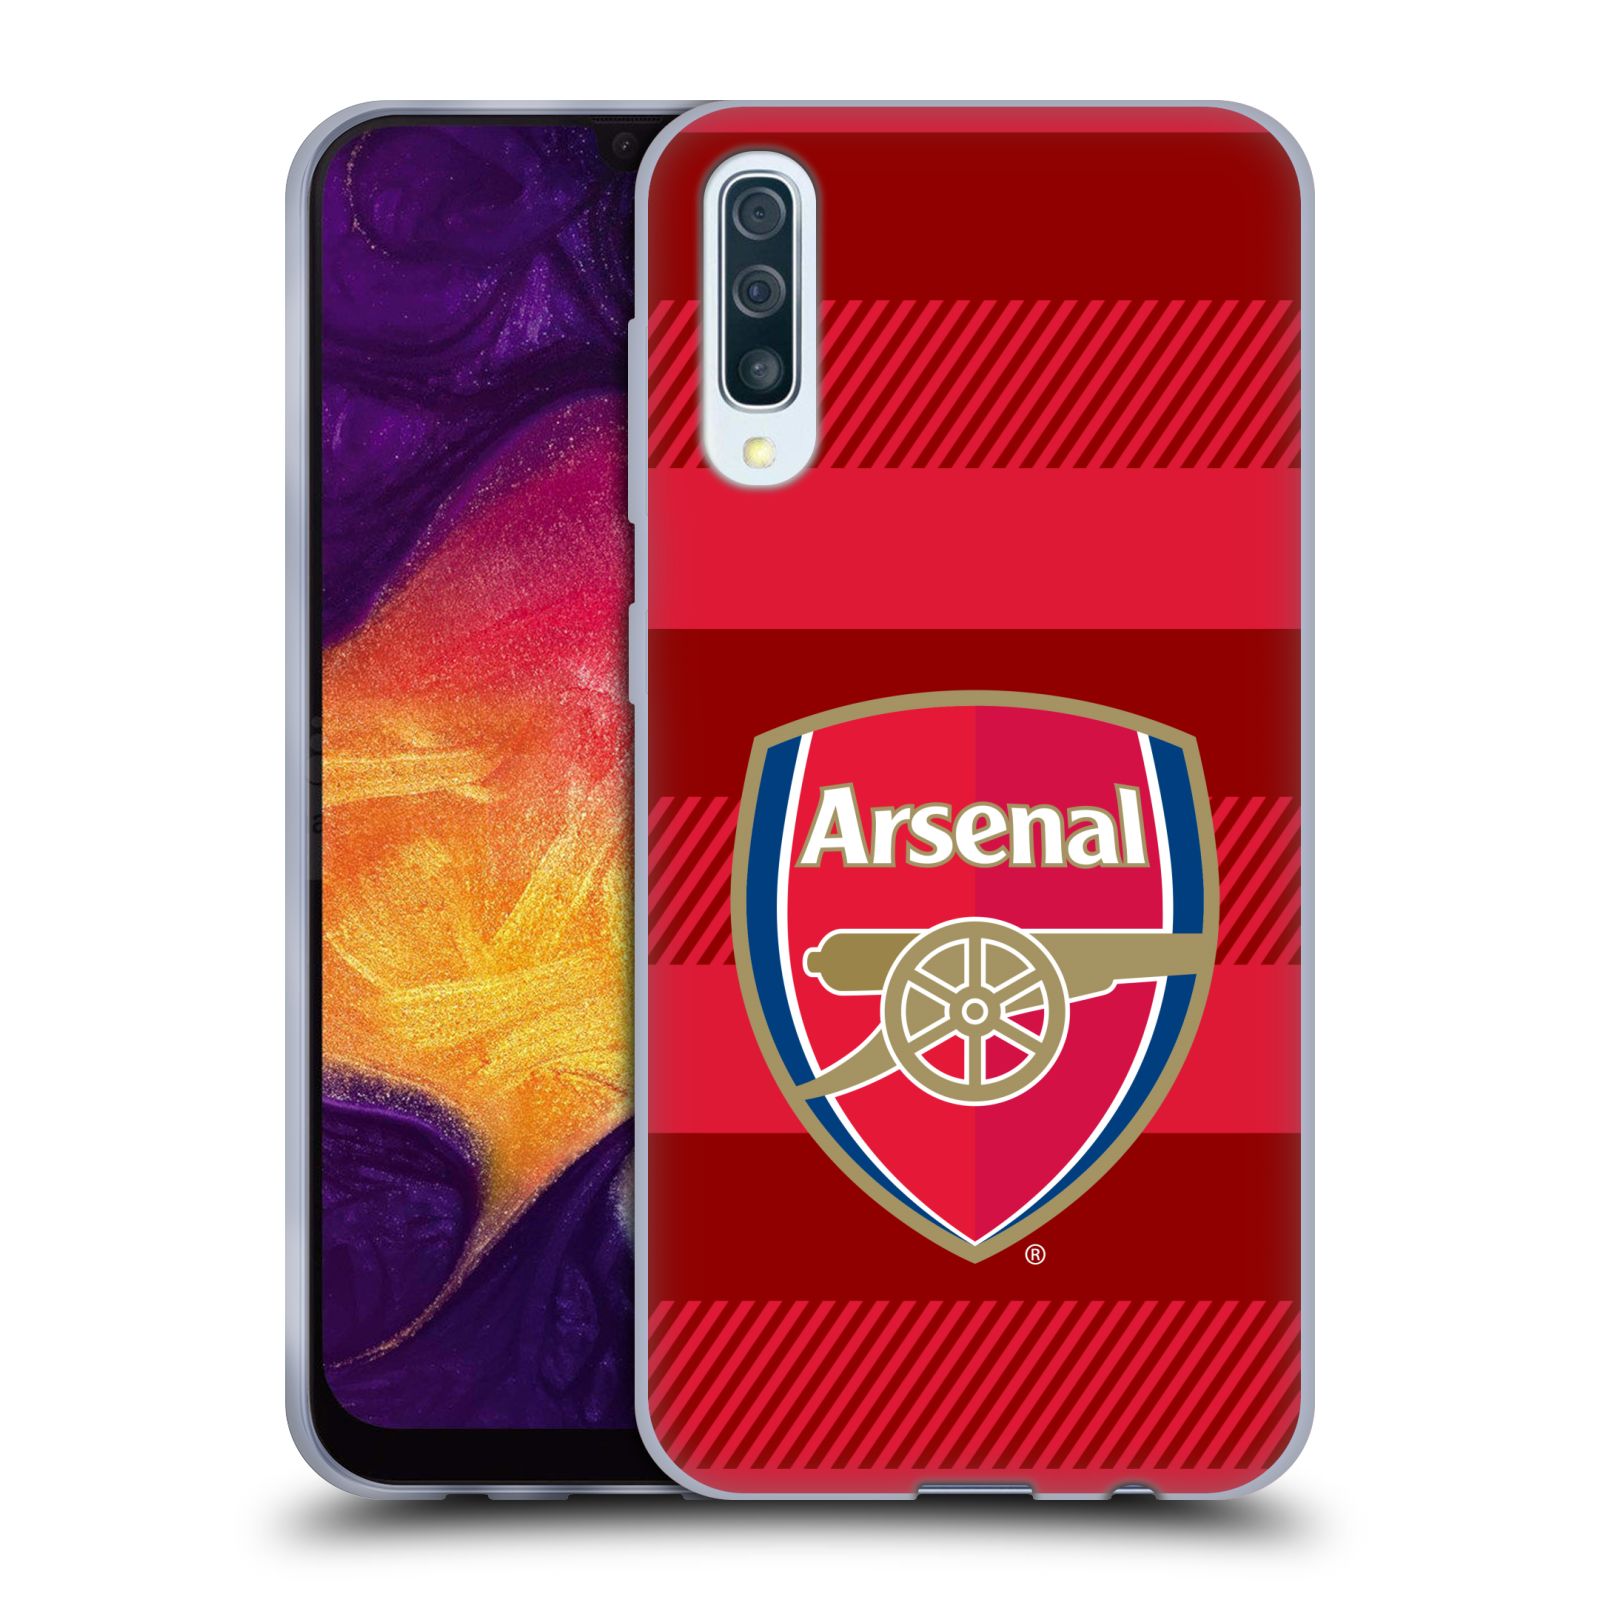 Silikonové pouzdro na mobil Samsung Galaxy A50 / A30s - Head Case - Arsenal FC - Logo s pruhy (Silikonový kryt, obal, pouzdro na mobilní telefon s motivem klubu Arsenal FC - Logo s pruhy pro Samsung Galaxy A50 / A30s z roku 2019)